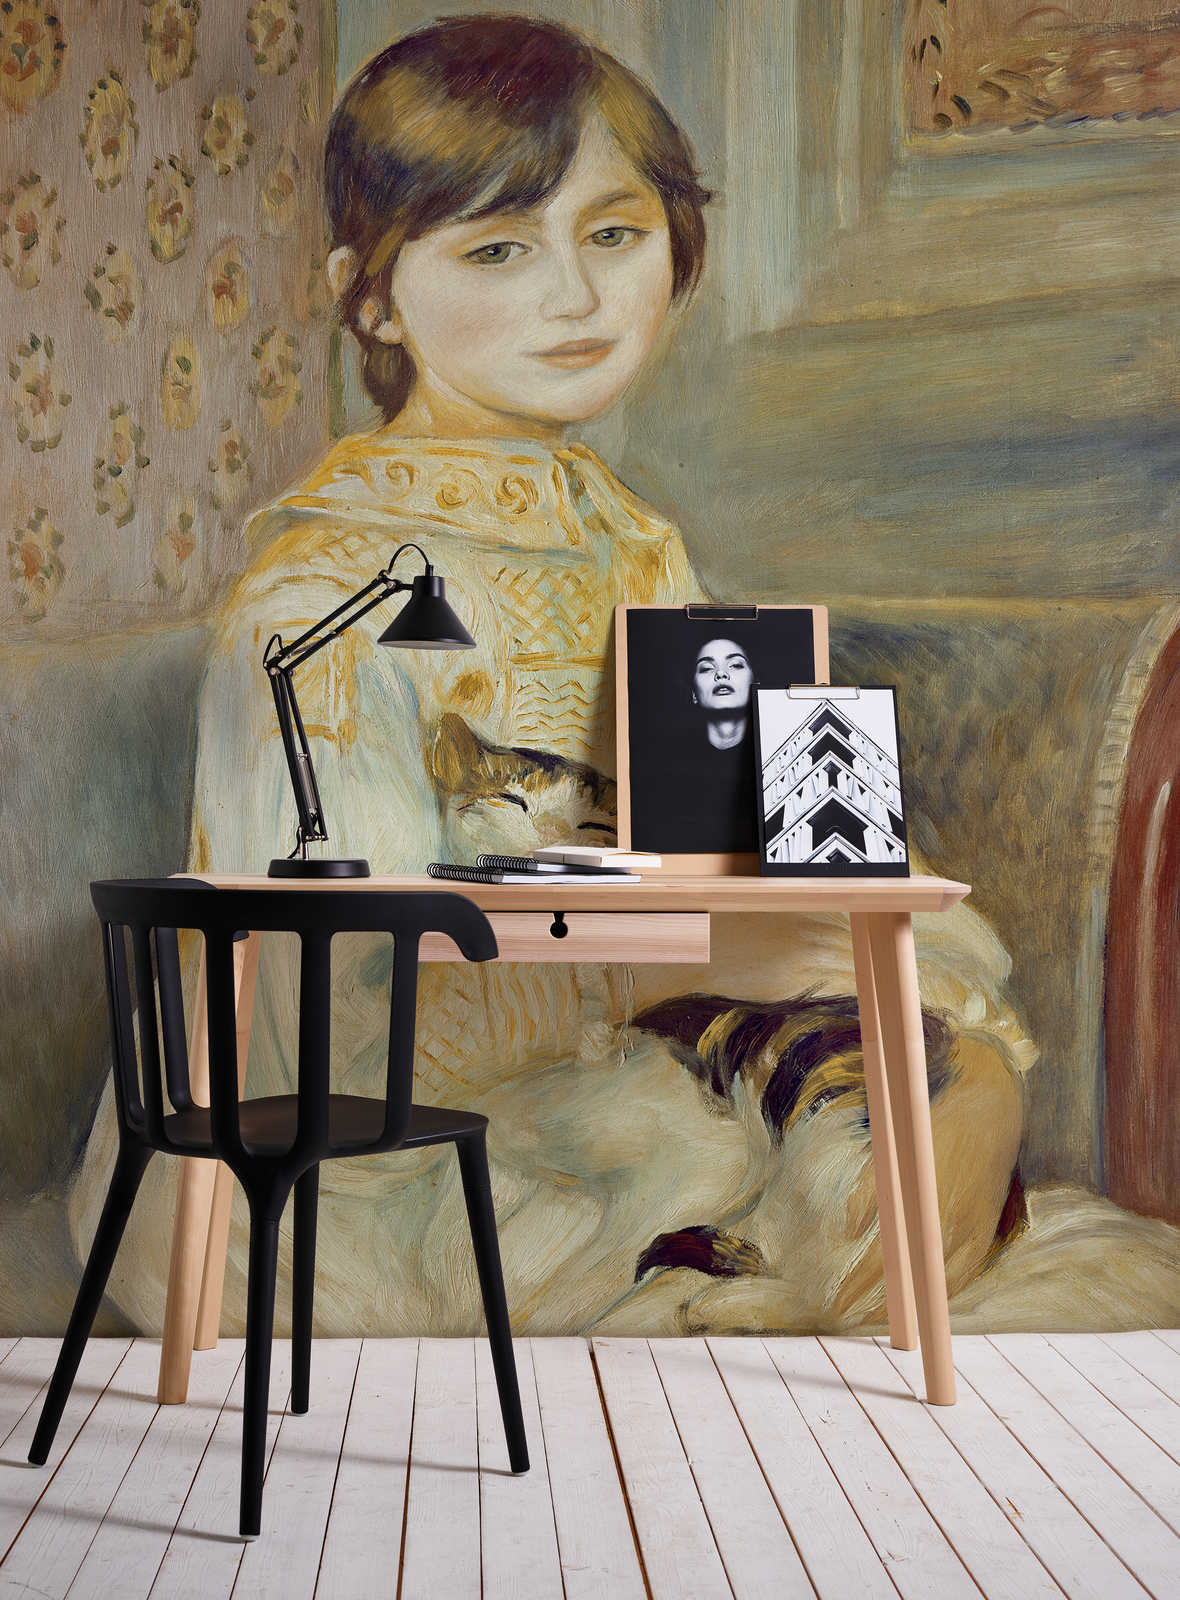             Mural "Mademoiselle Julie con gato" de Pierre Auguste Renoir
        